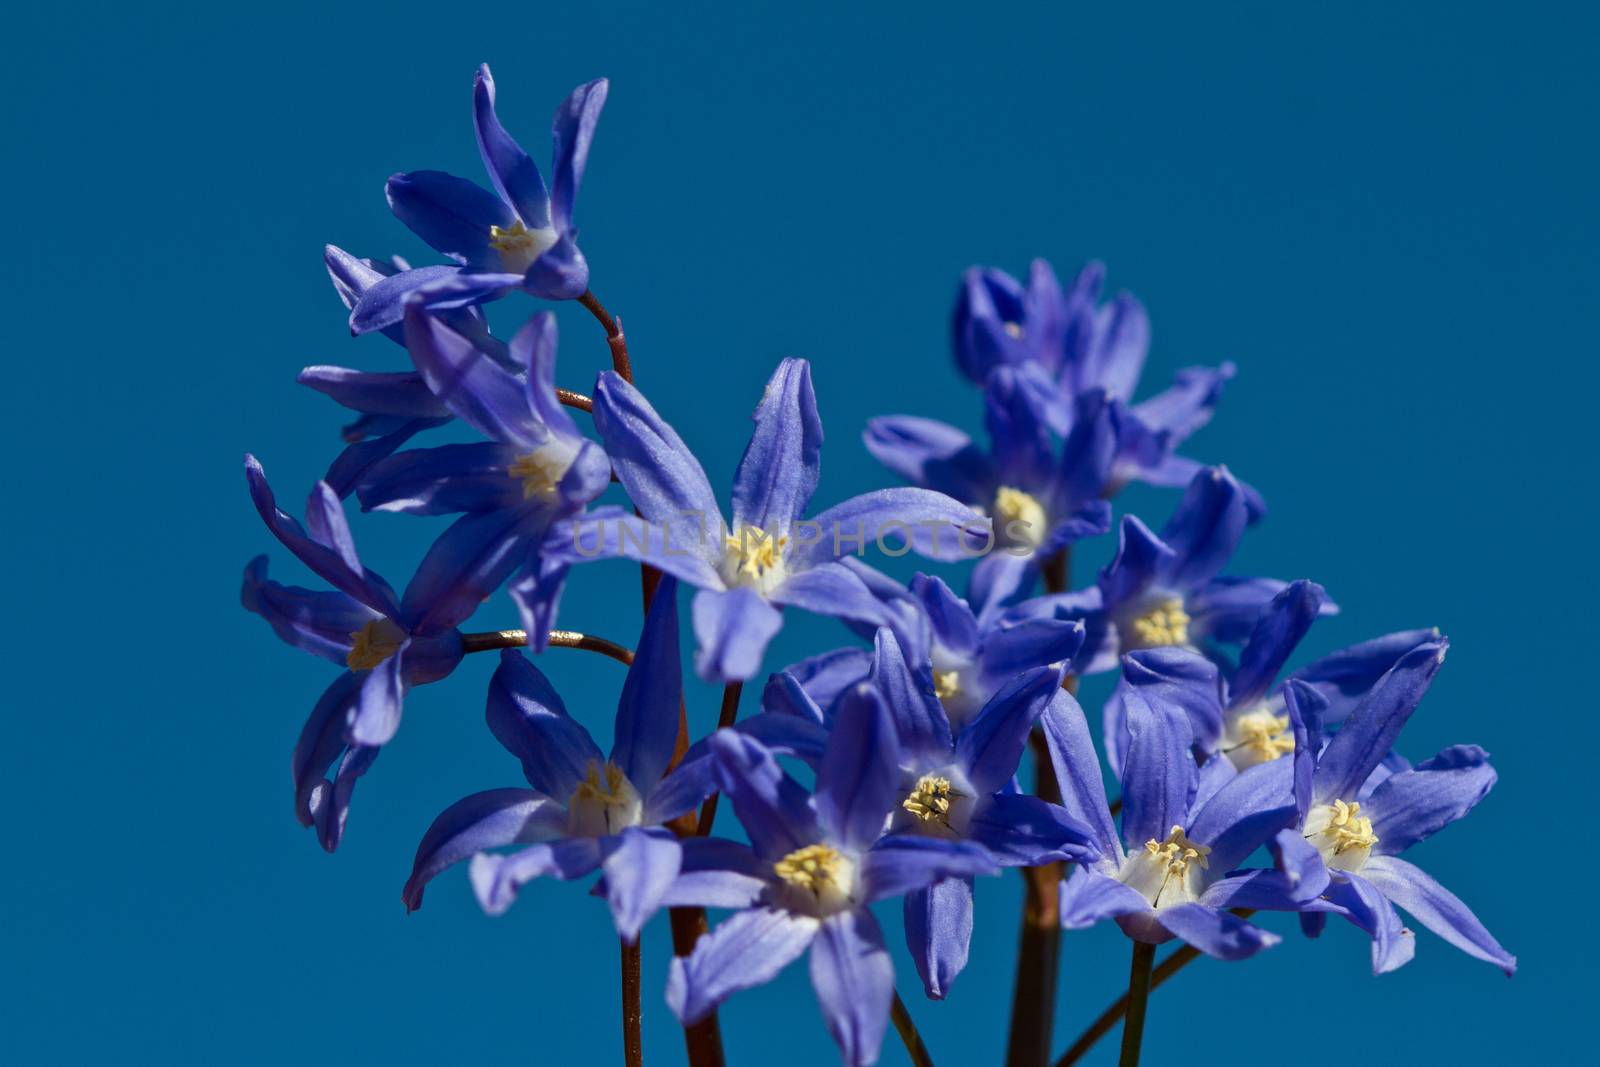 Delphinium flower shot against a blue sky by jeancliclac